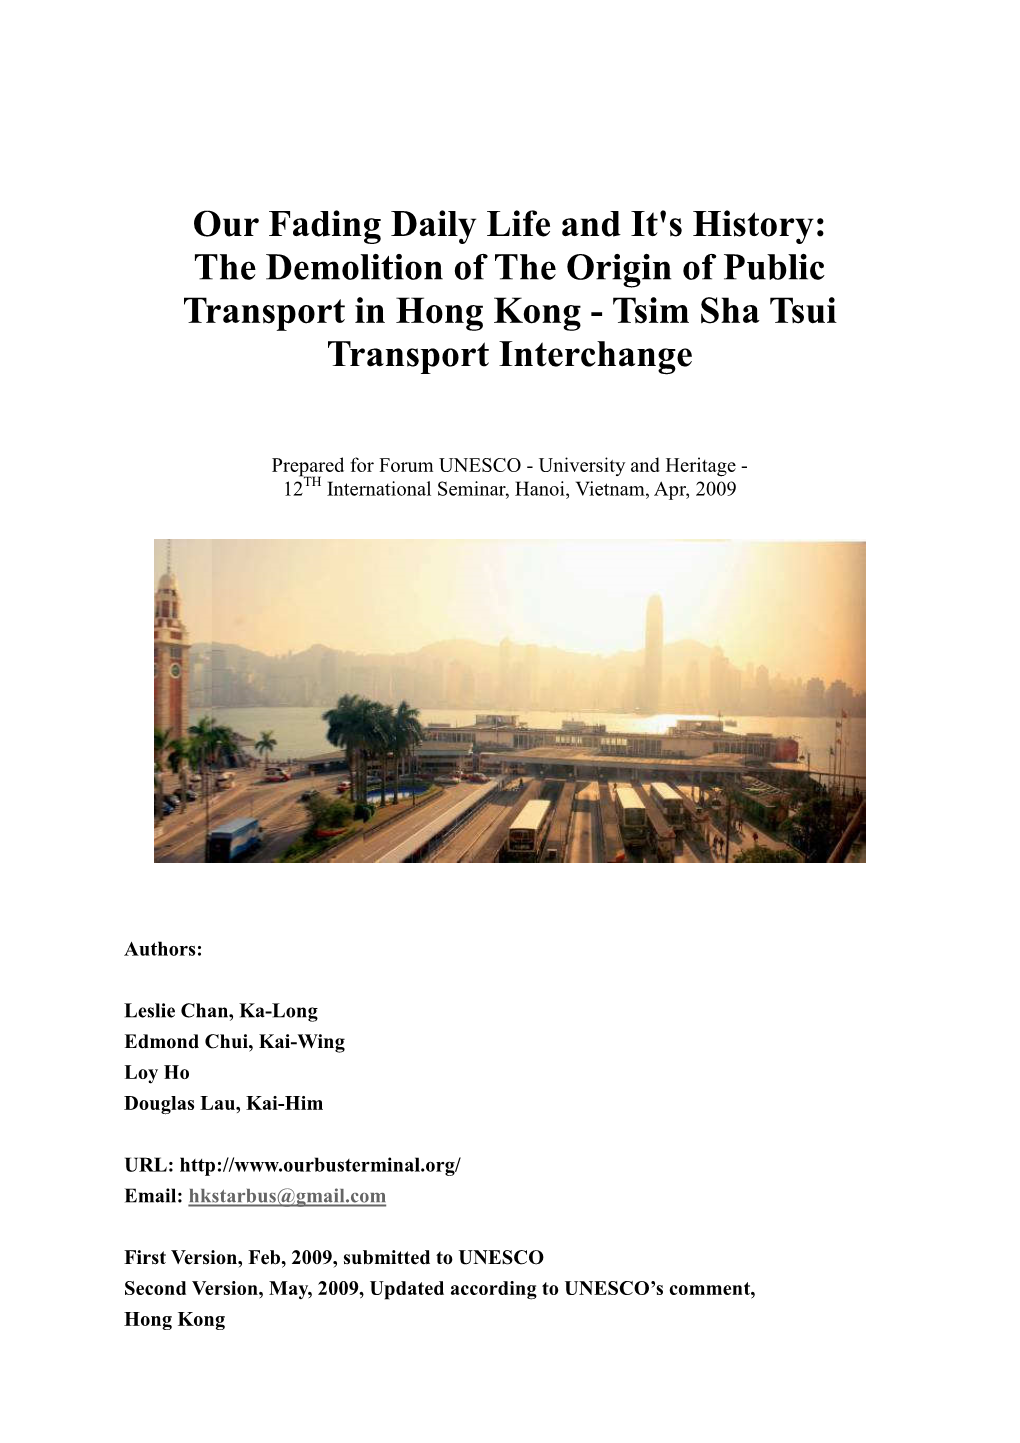 The Demolition of the Origin of Public Transport in Hong Kong - Tsim Sha Tsui Transport Interchange